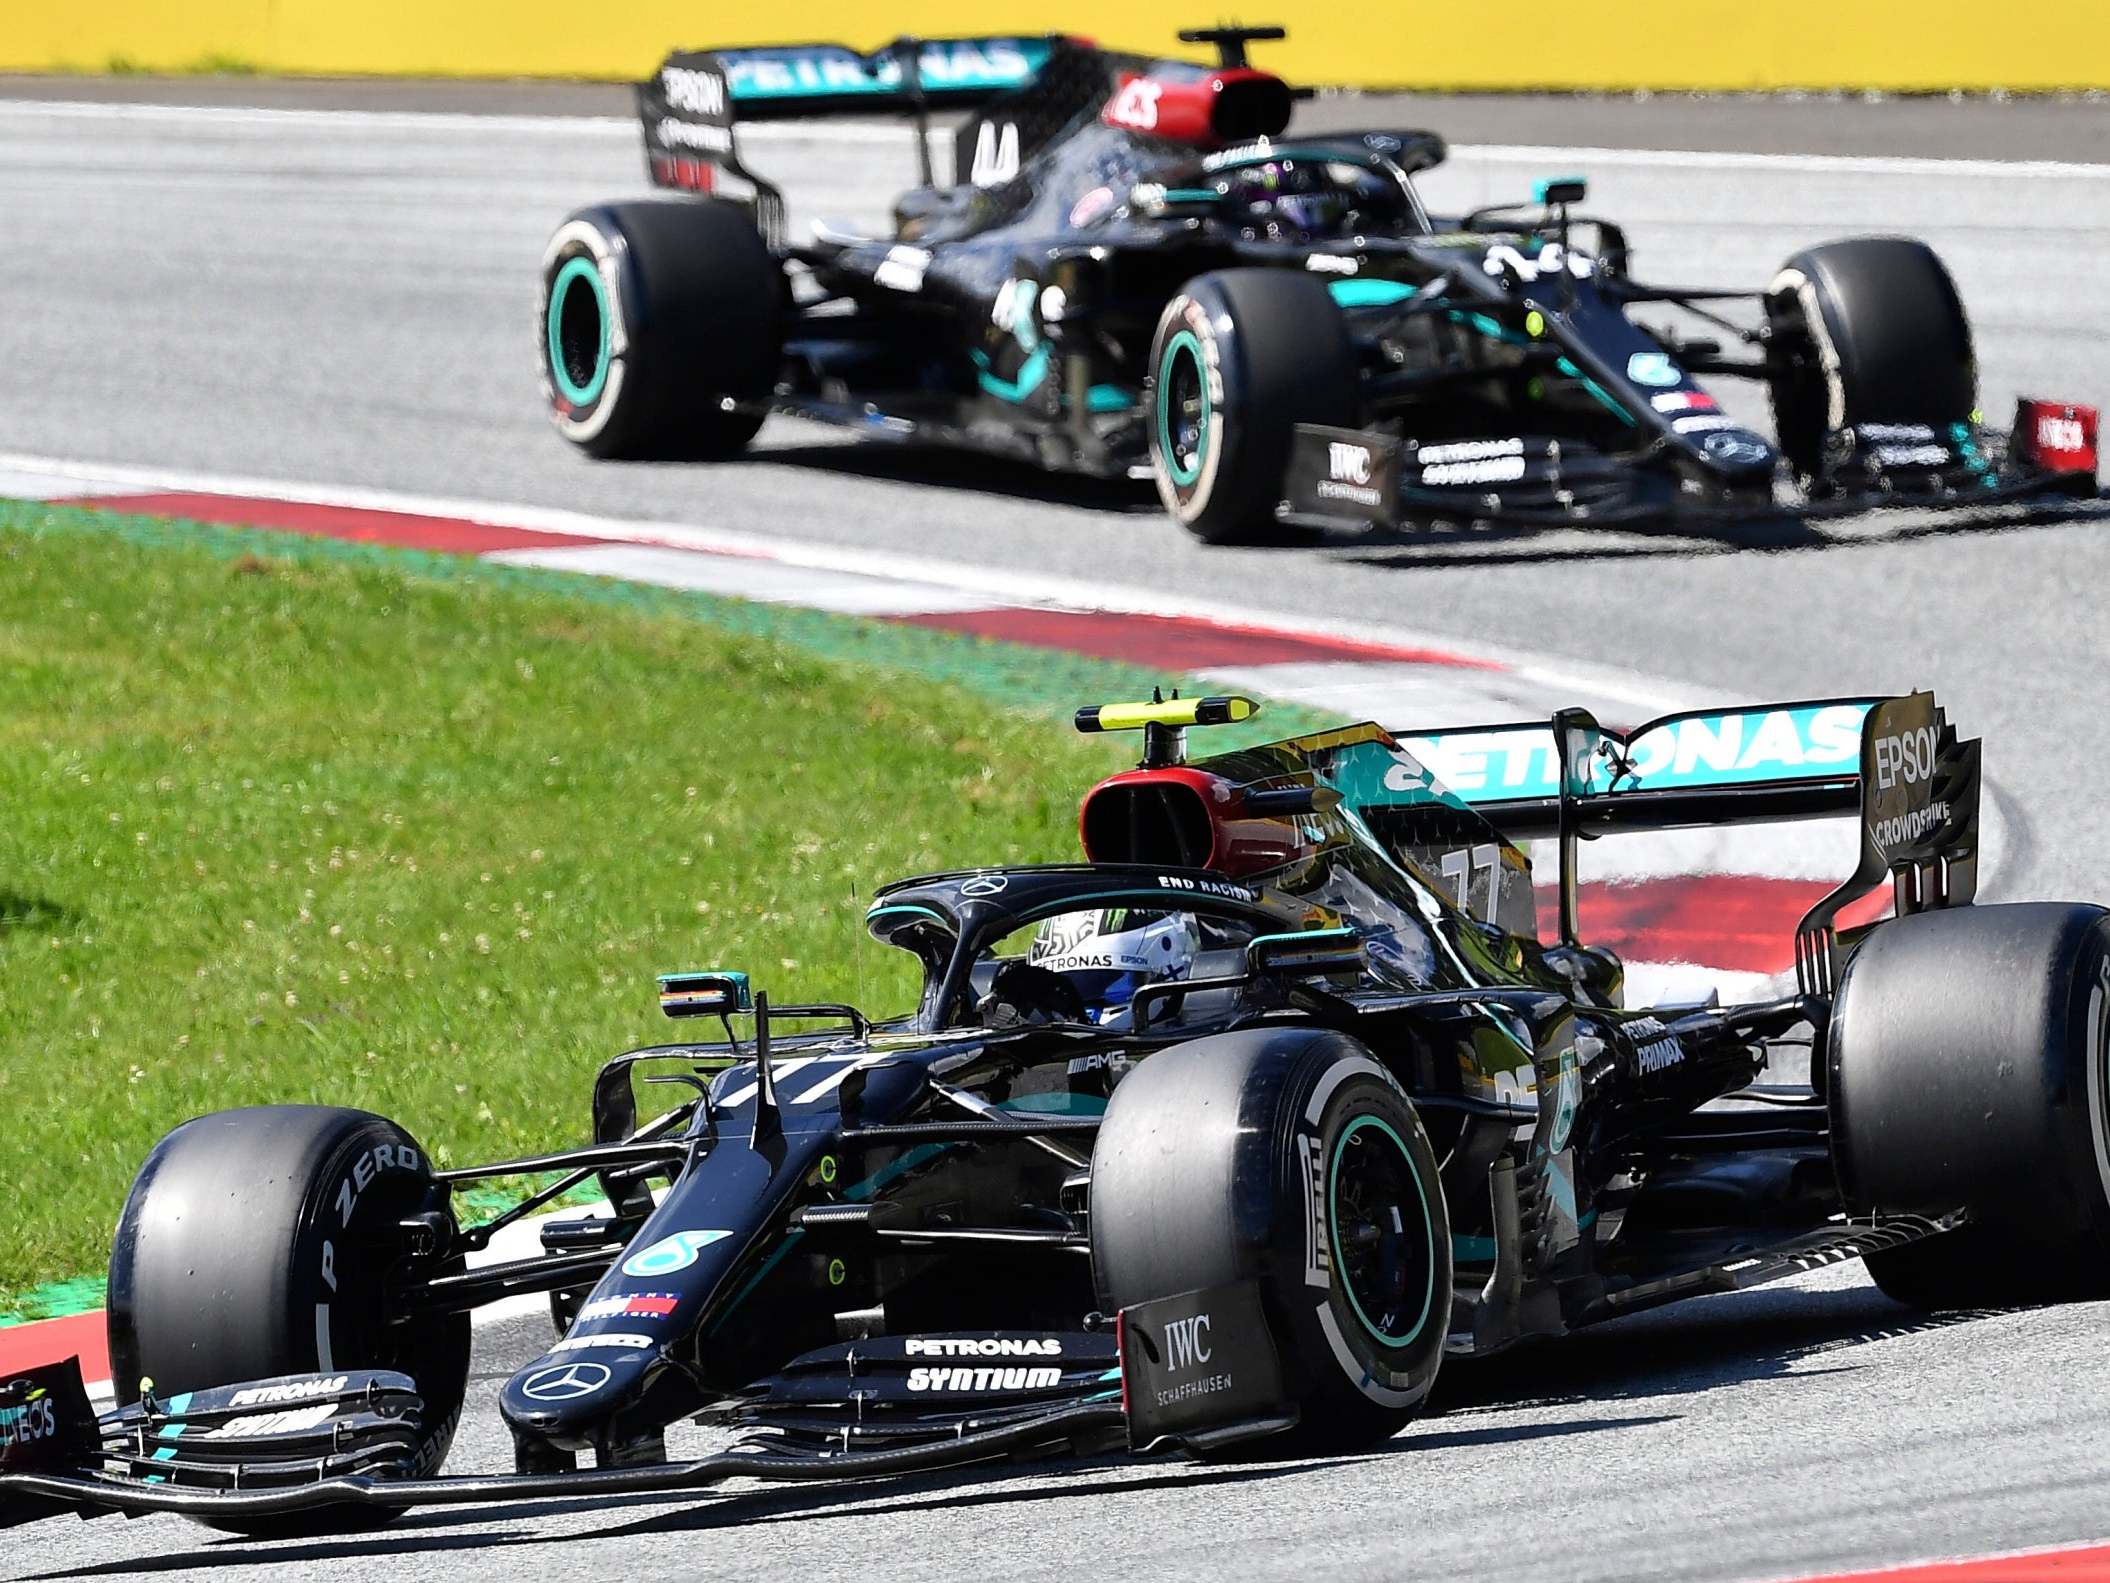 Both Bottas and Hamilton had gearbox sensor issues